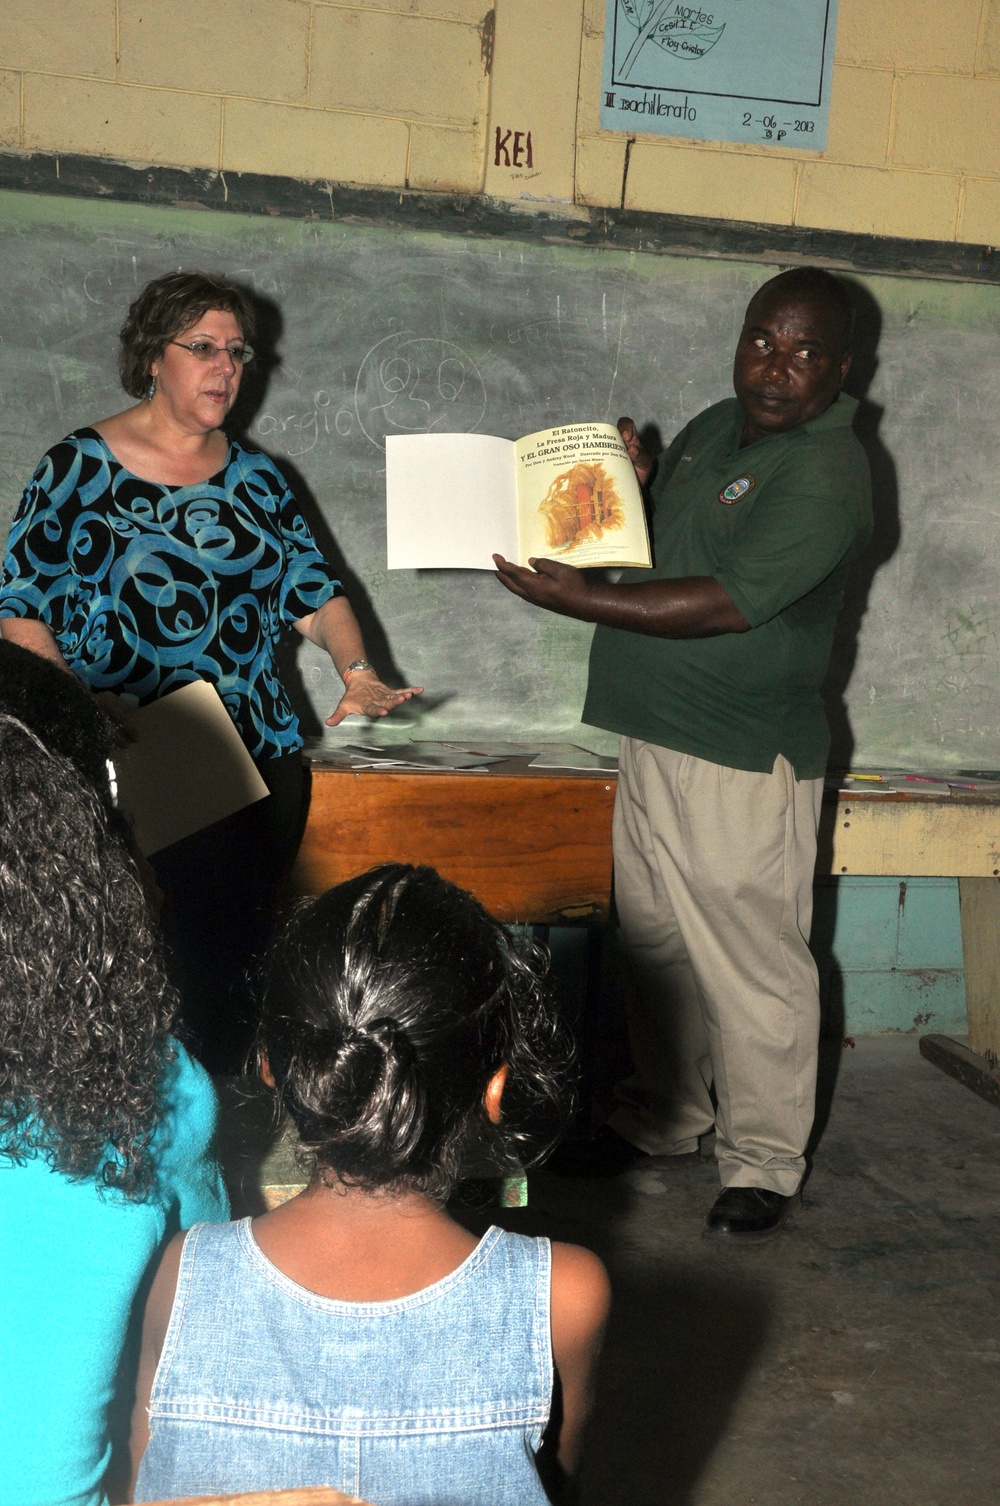 American ambassador to Honduras brings educational material to remote village